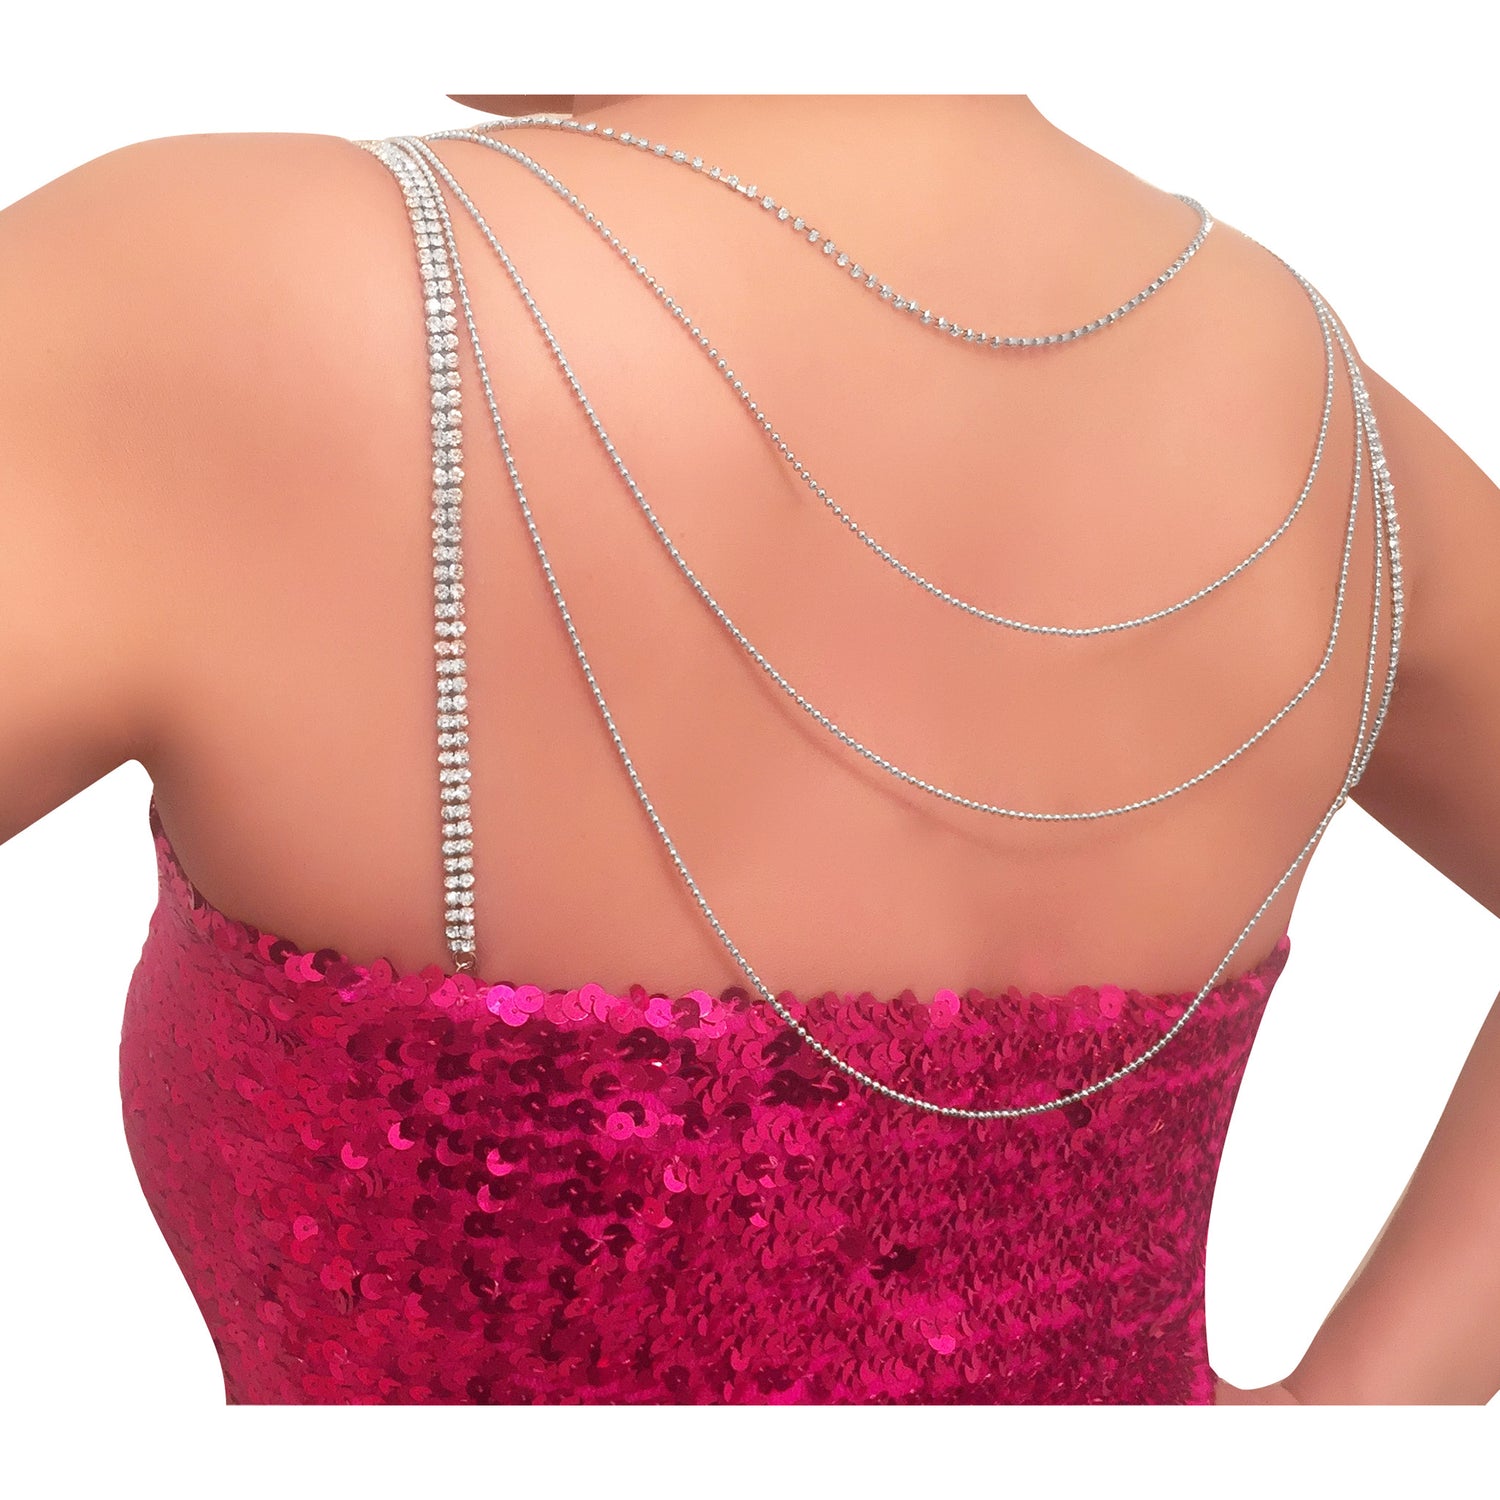 Bella's Lingerie - (No-Sew) Bra Straps, Dress Straps by PIN STRAPS